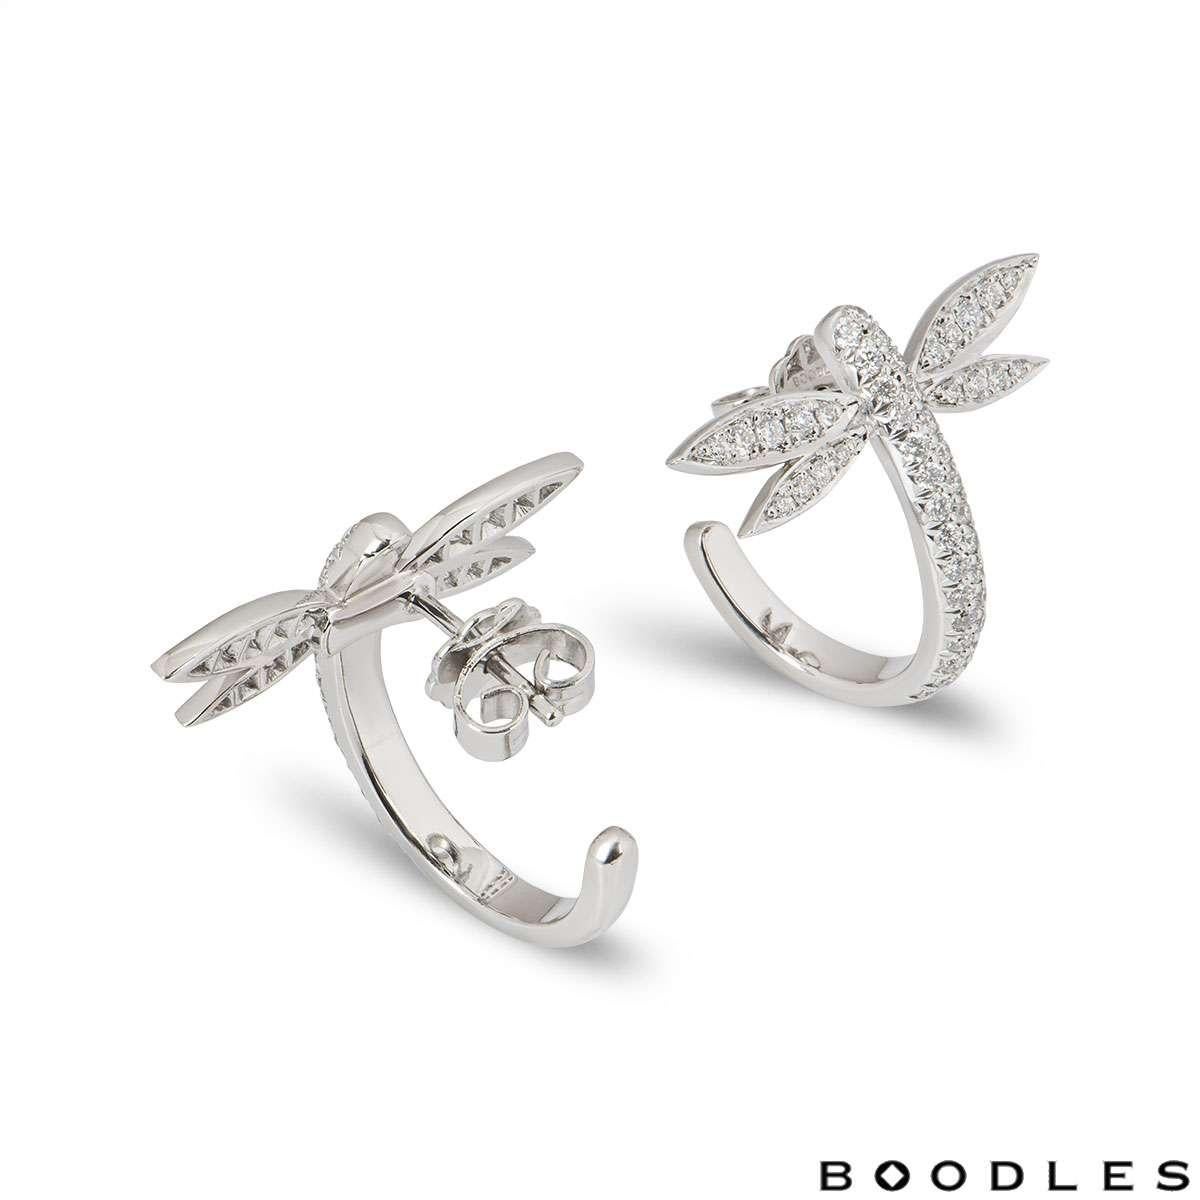 dragonfly earrings white gold